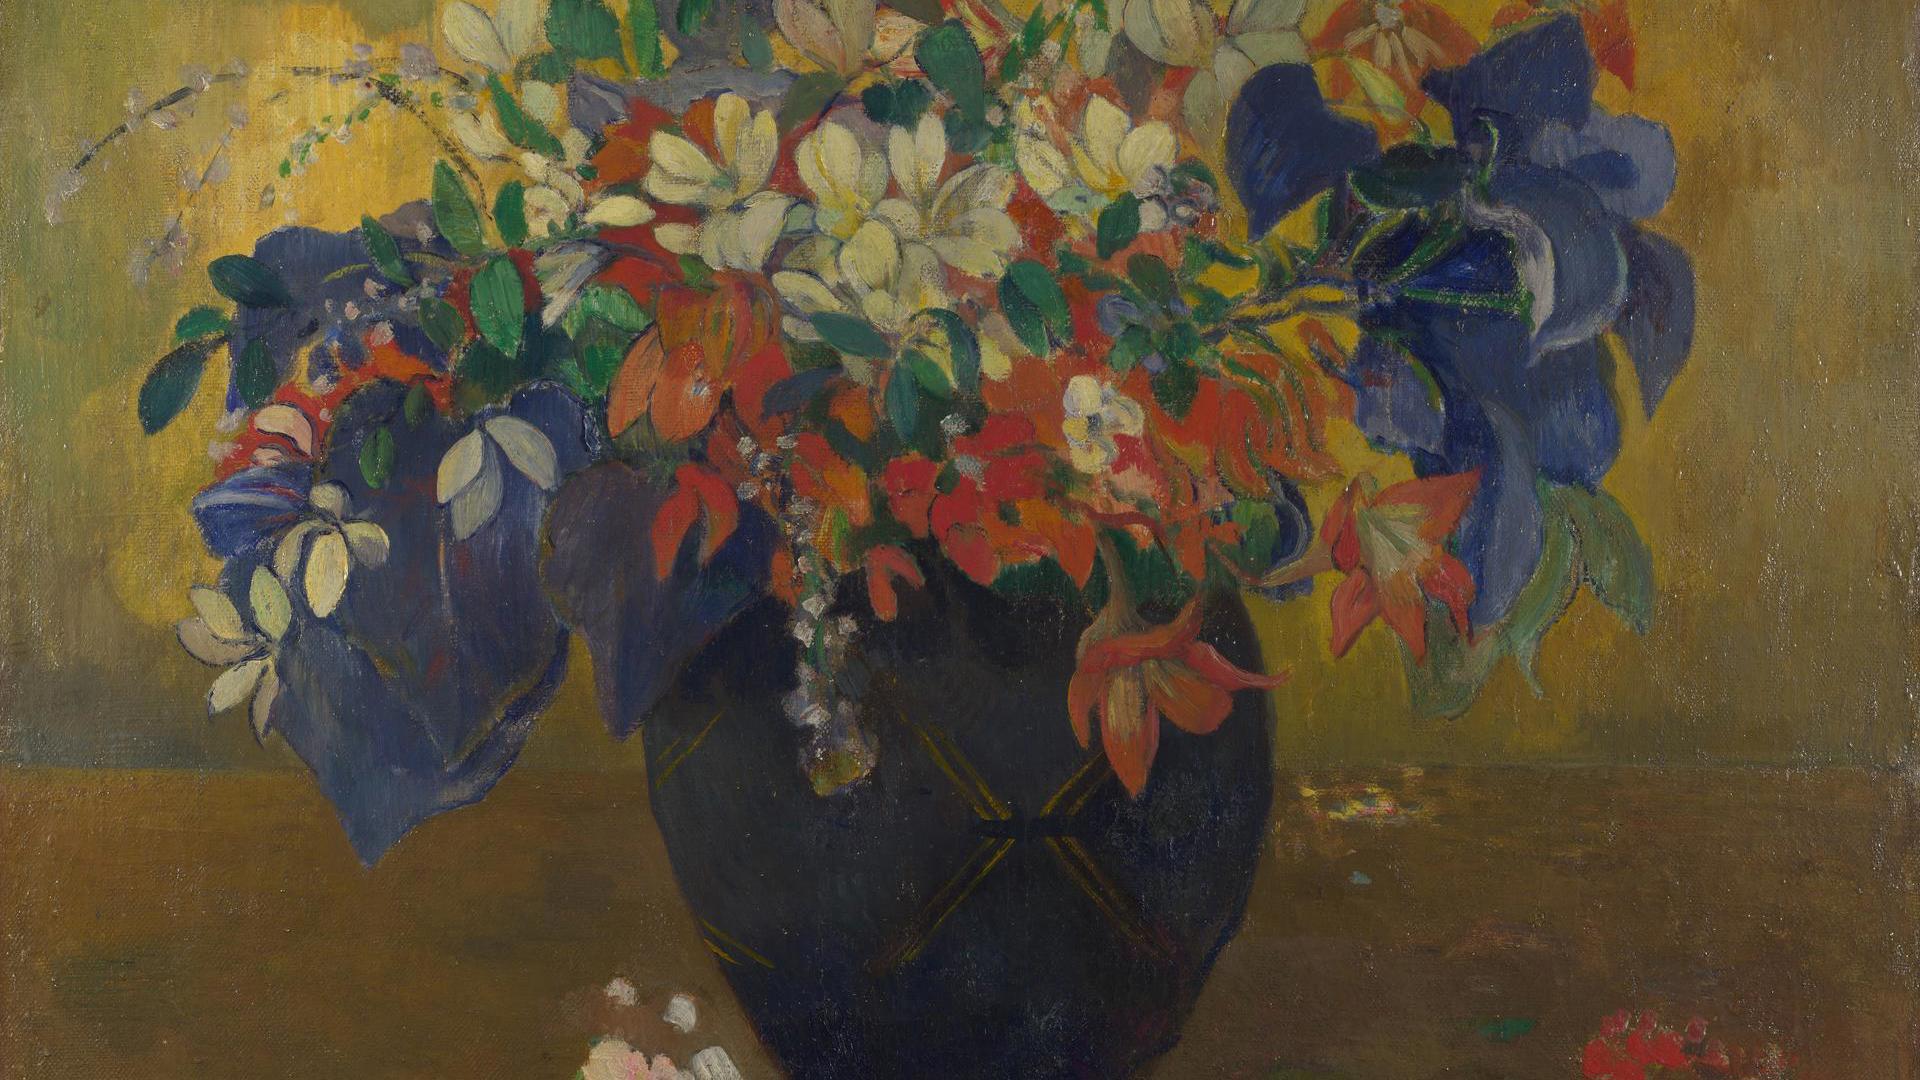 A Vase of Flowers by Paul Gauguin